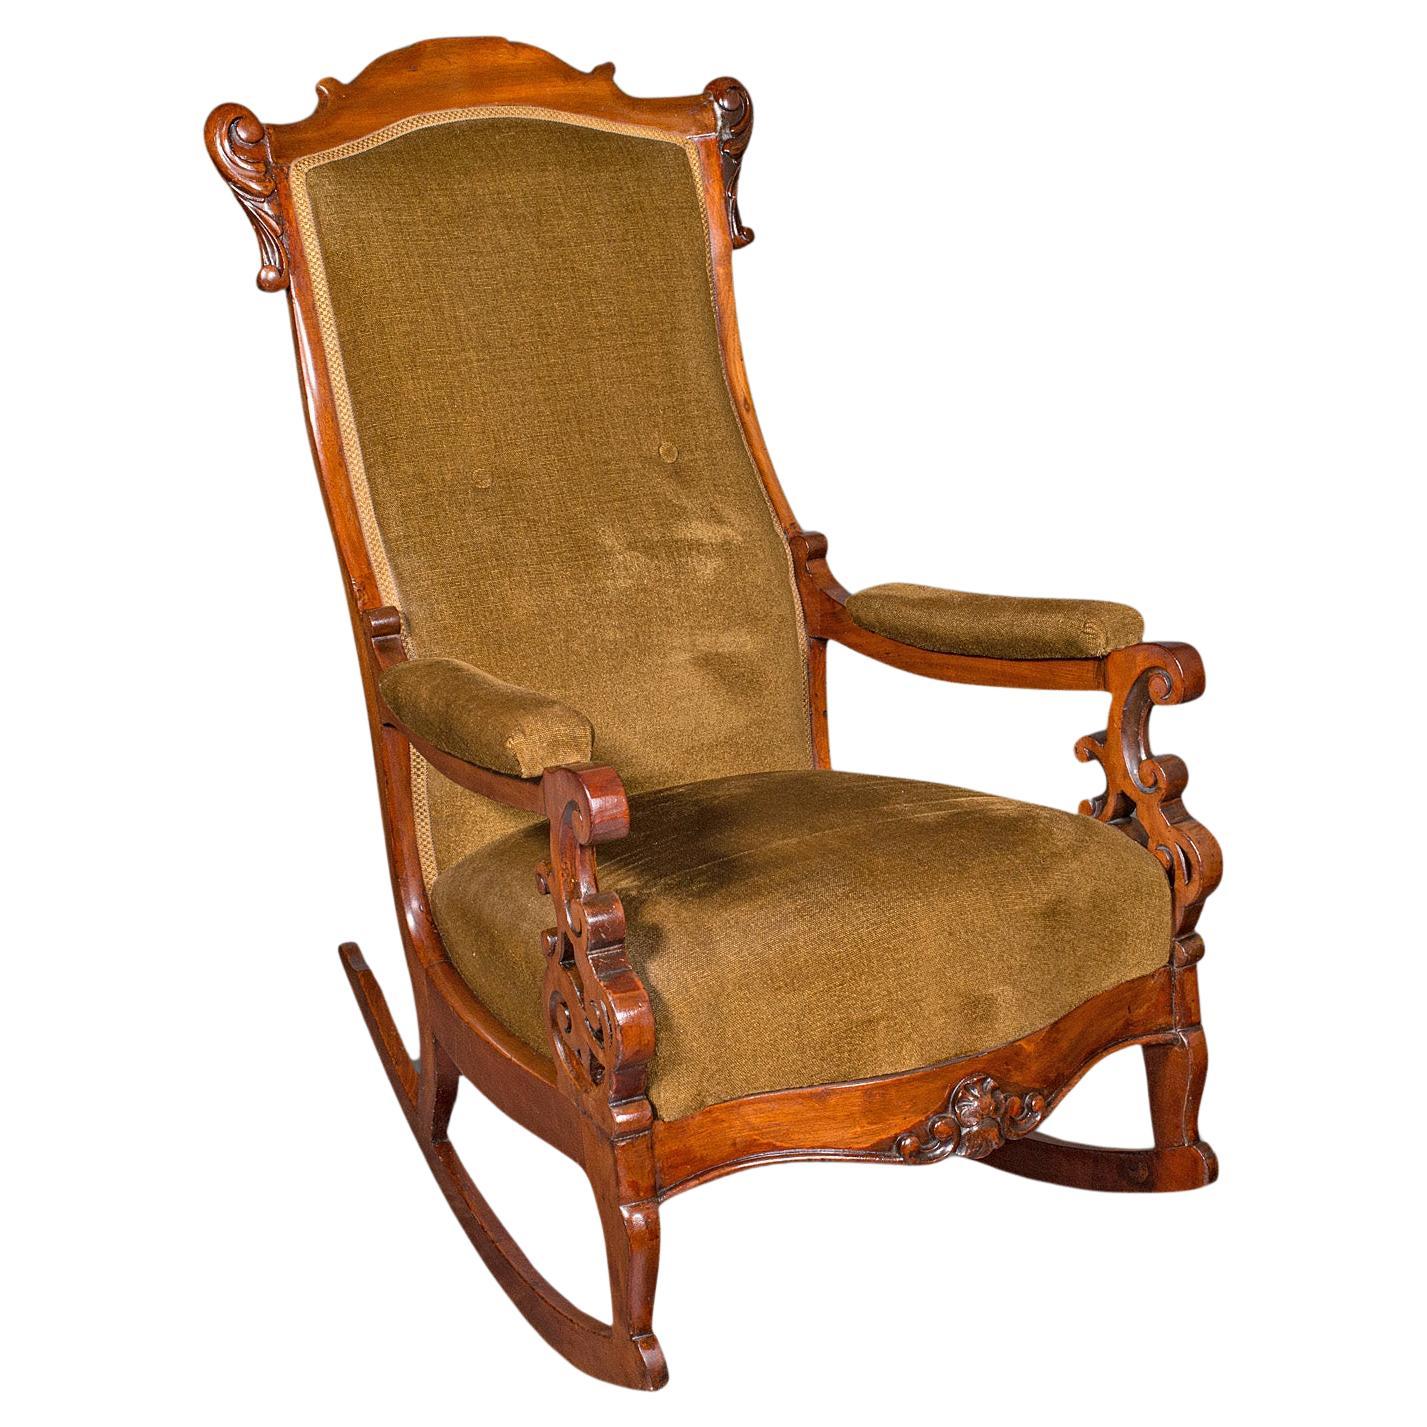 Antiquity Rocking Chair, English, Walnut, Armchair, Rocker, Victorian, Circa 1880